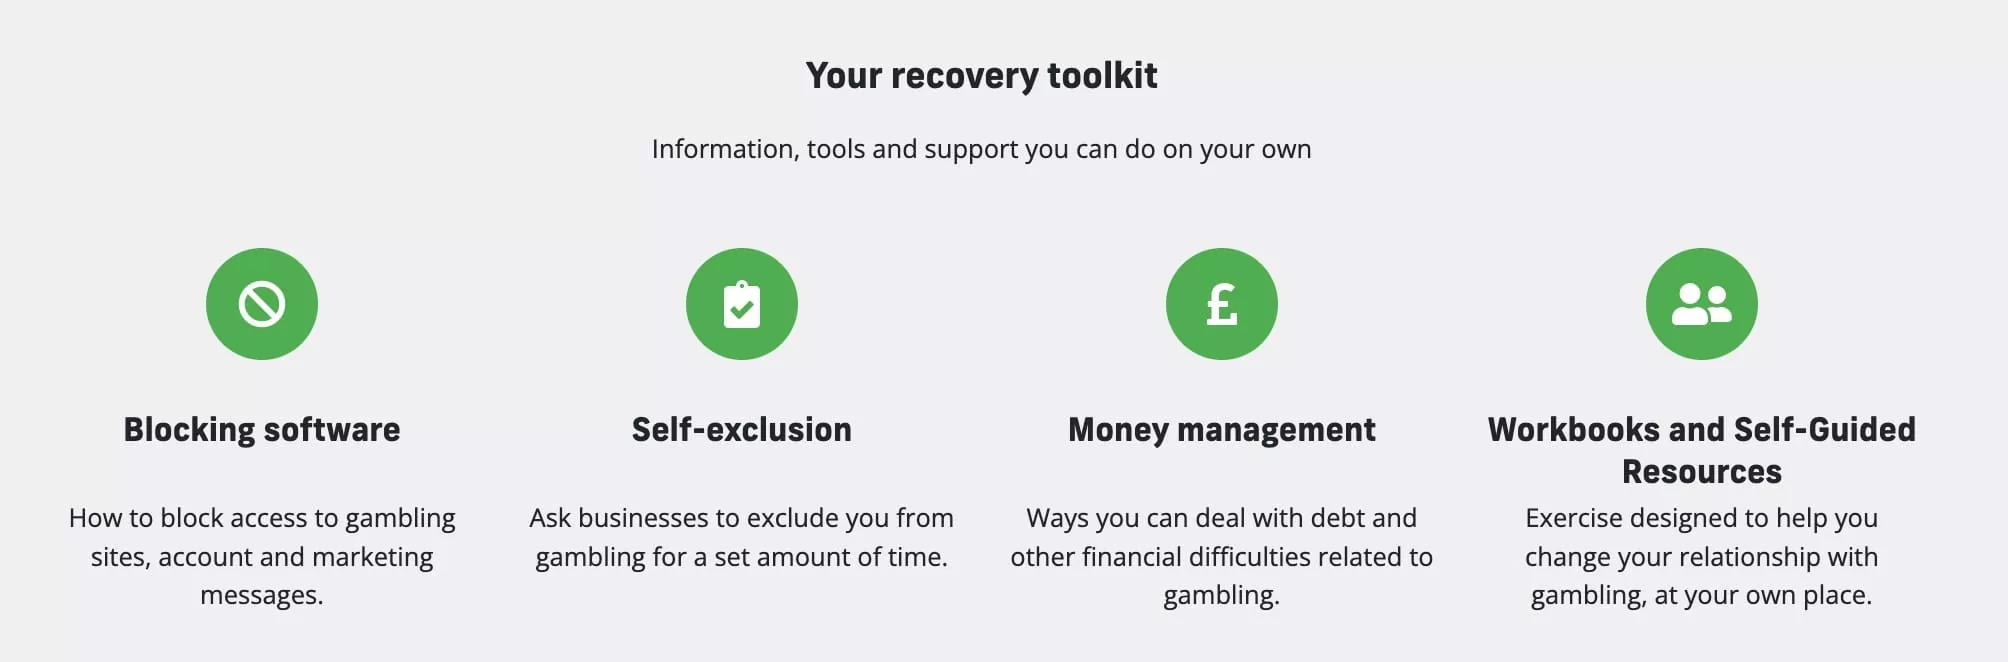 Responsible Gambling toolkit